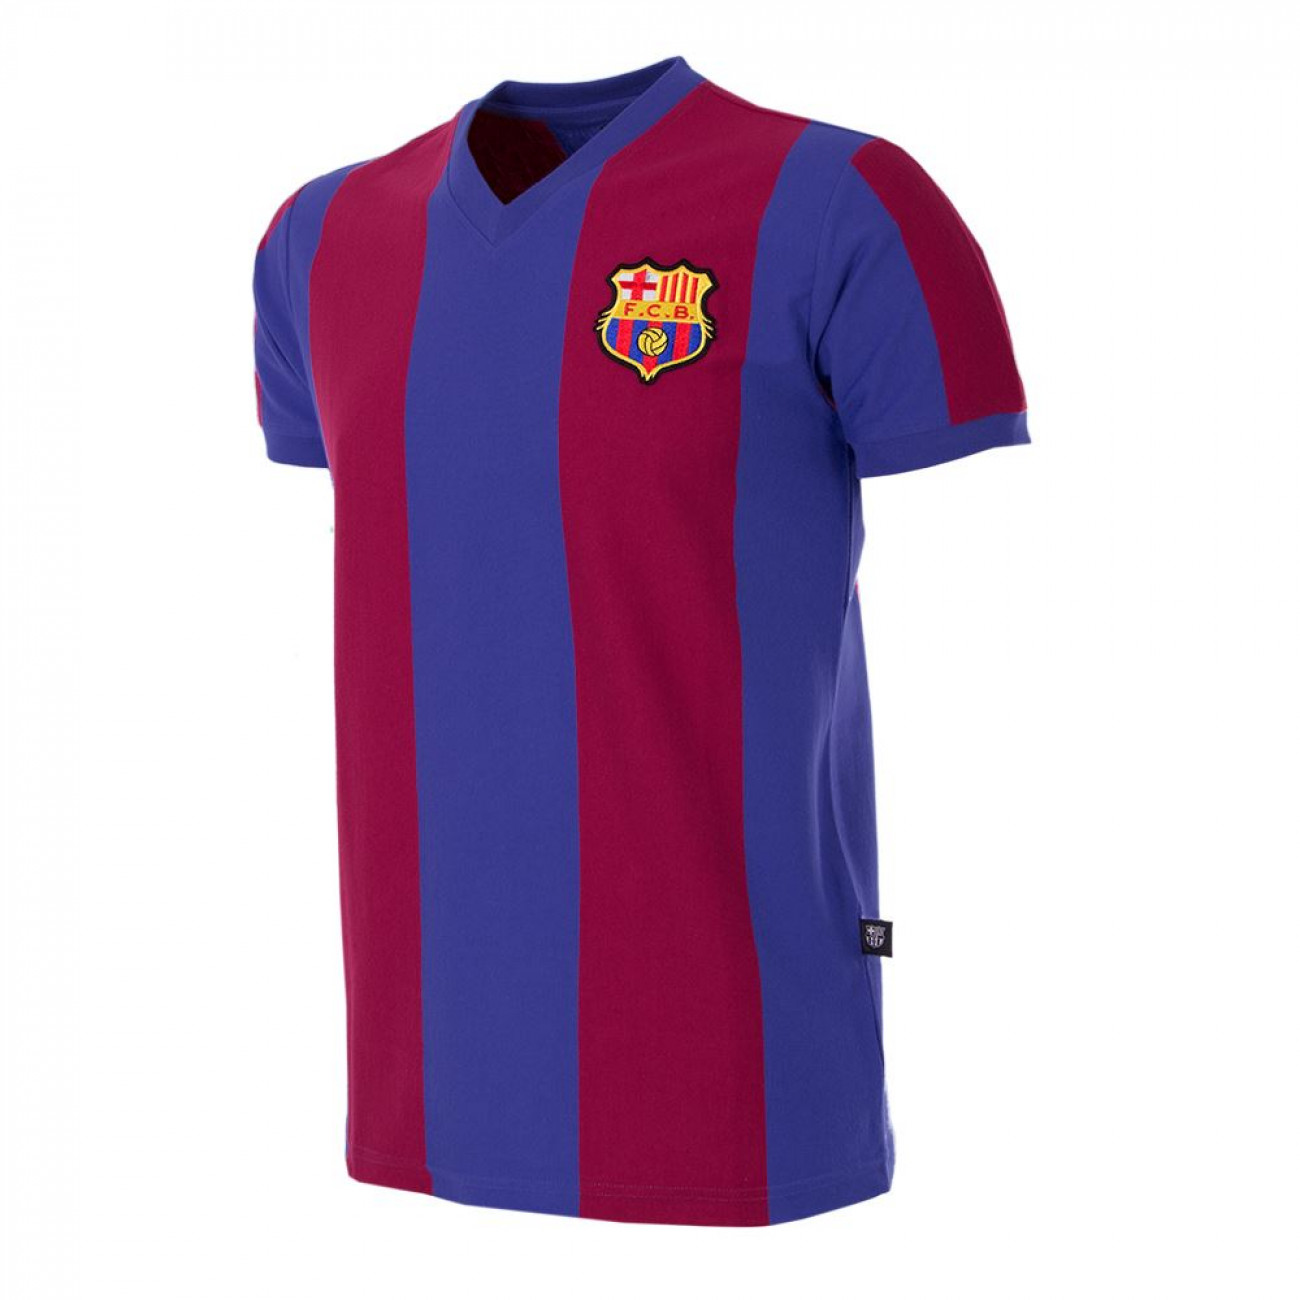 Camiseta retro oficial FC Barcelona Cruyff | Retrofootball®